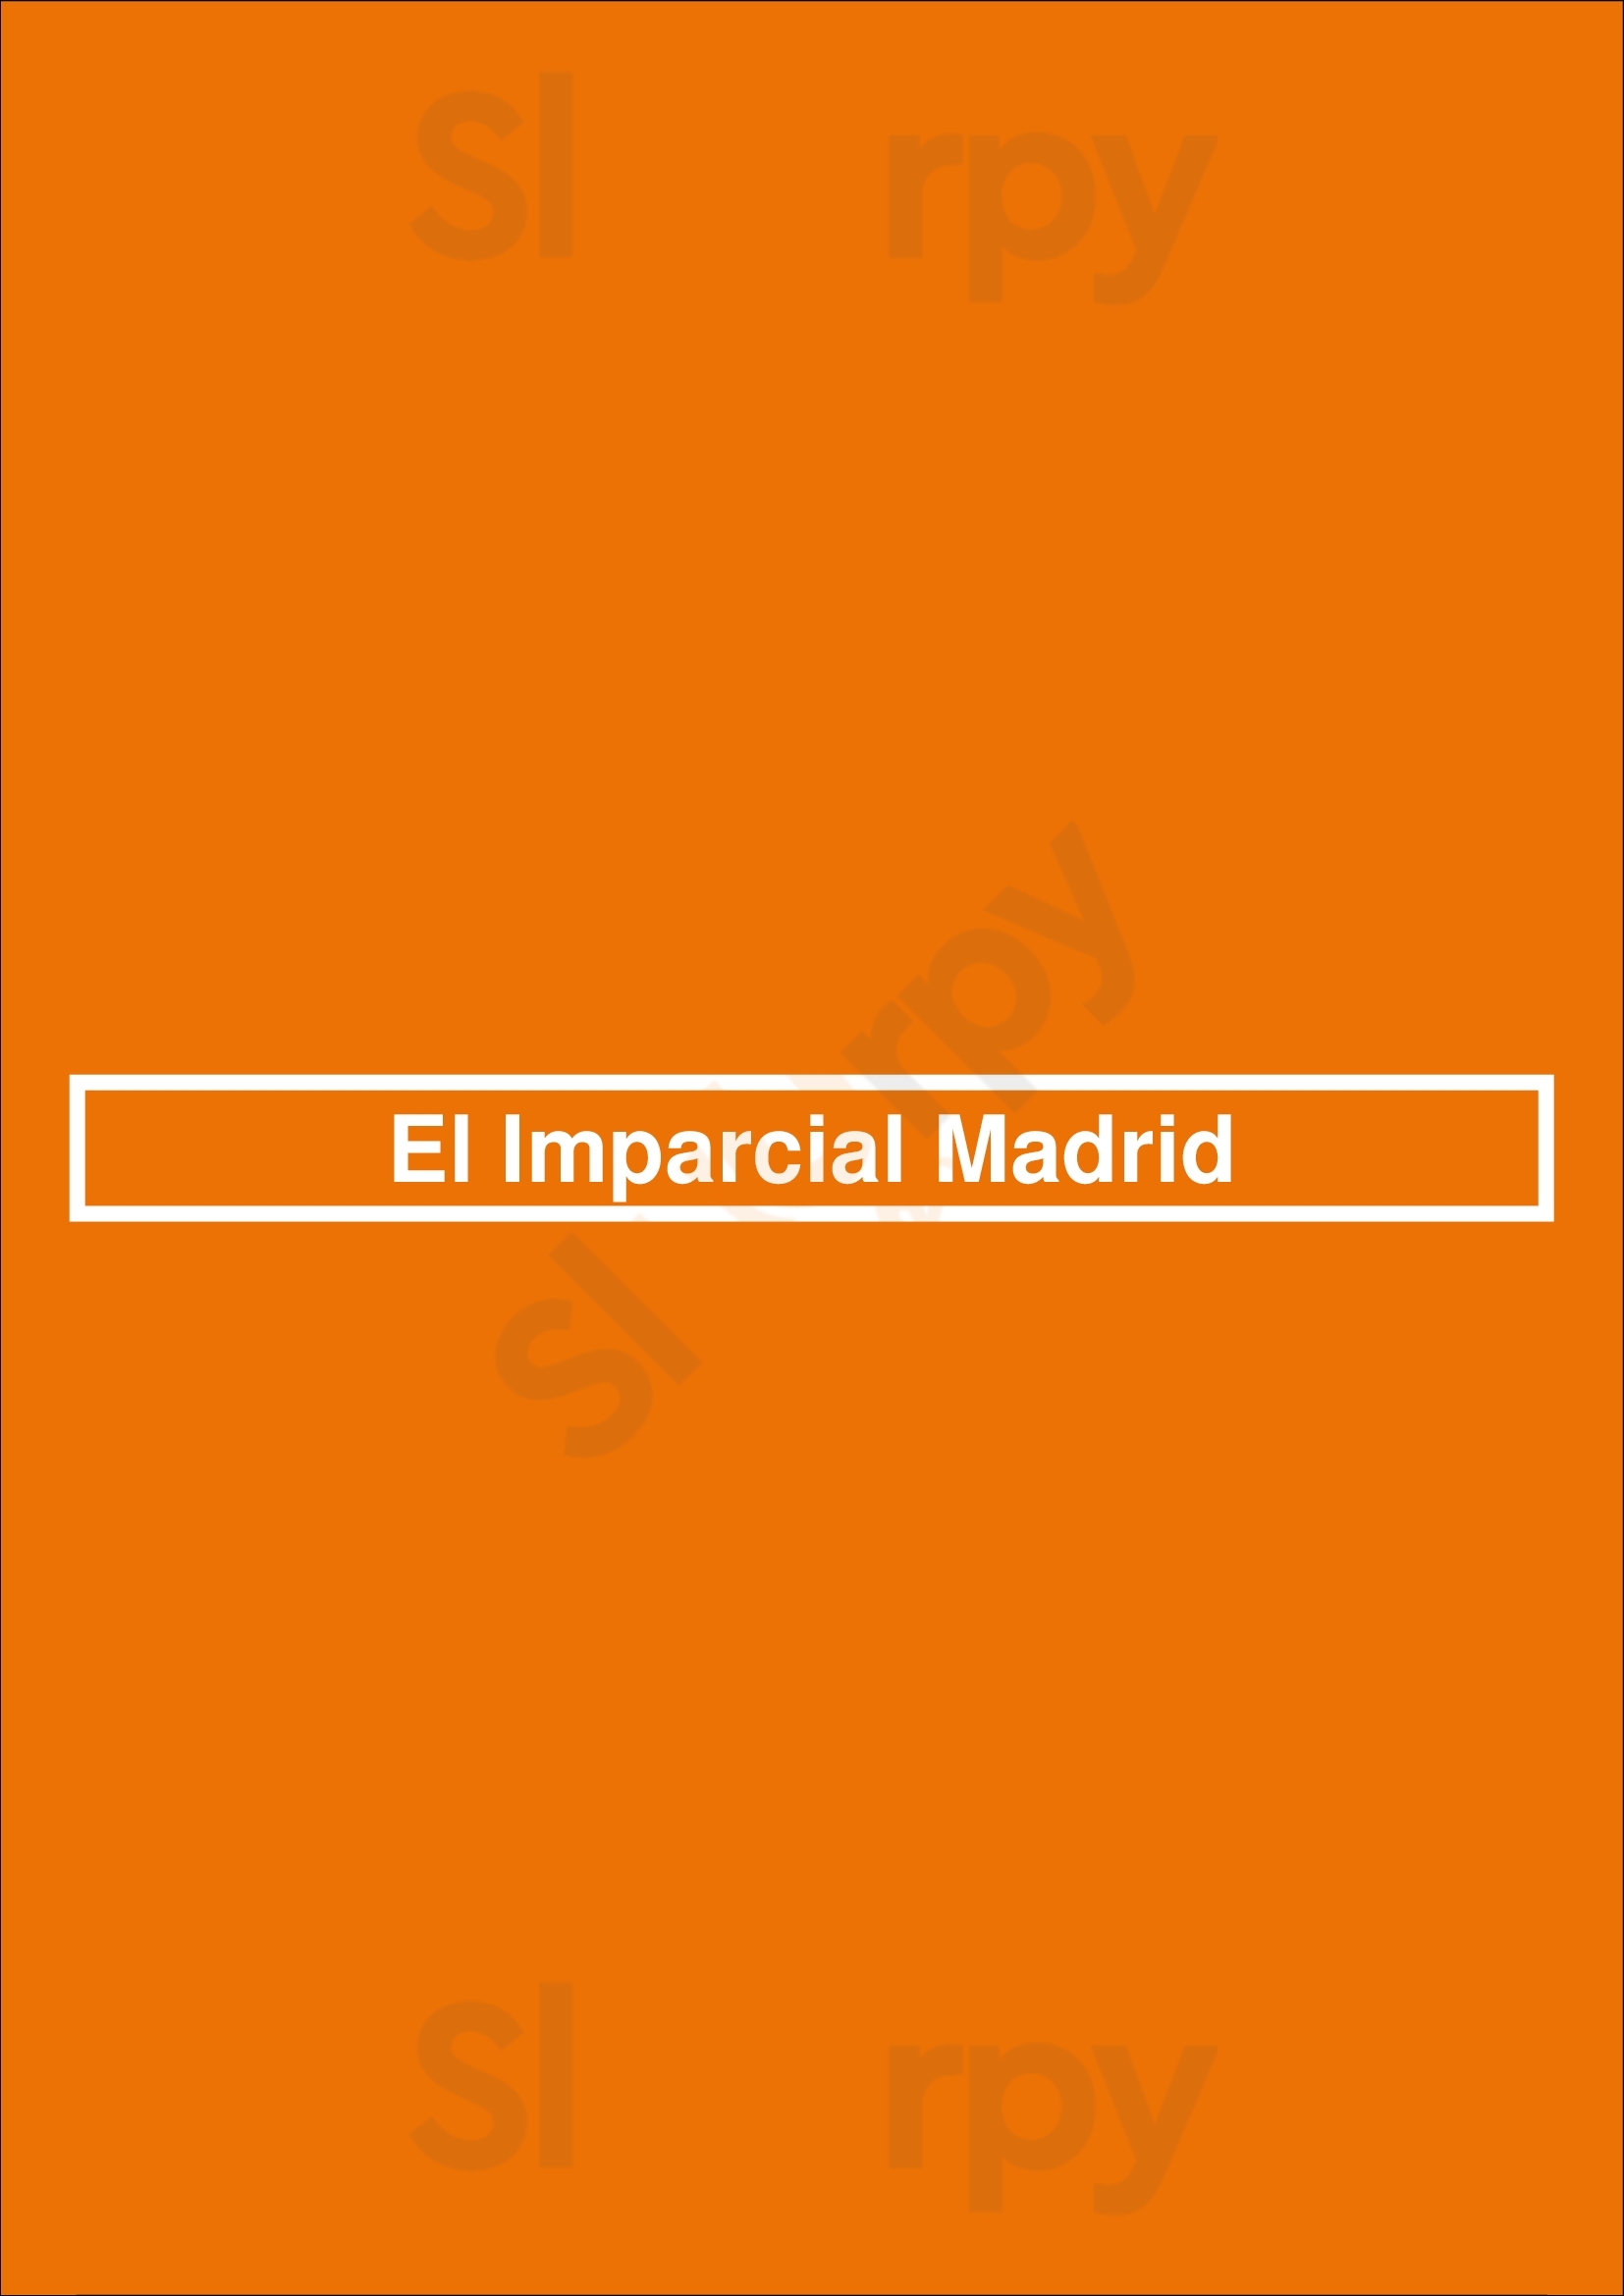 El Imparcial Madrid Madrid Menu - 1